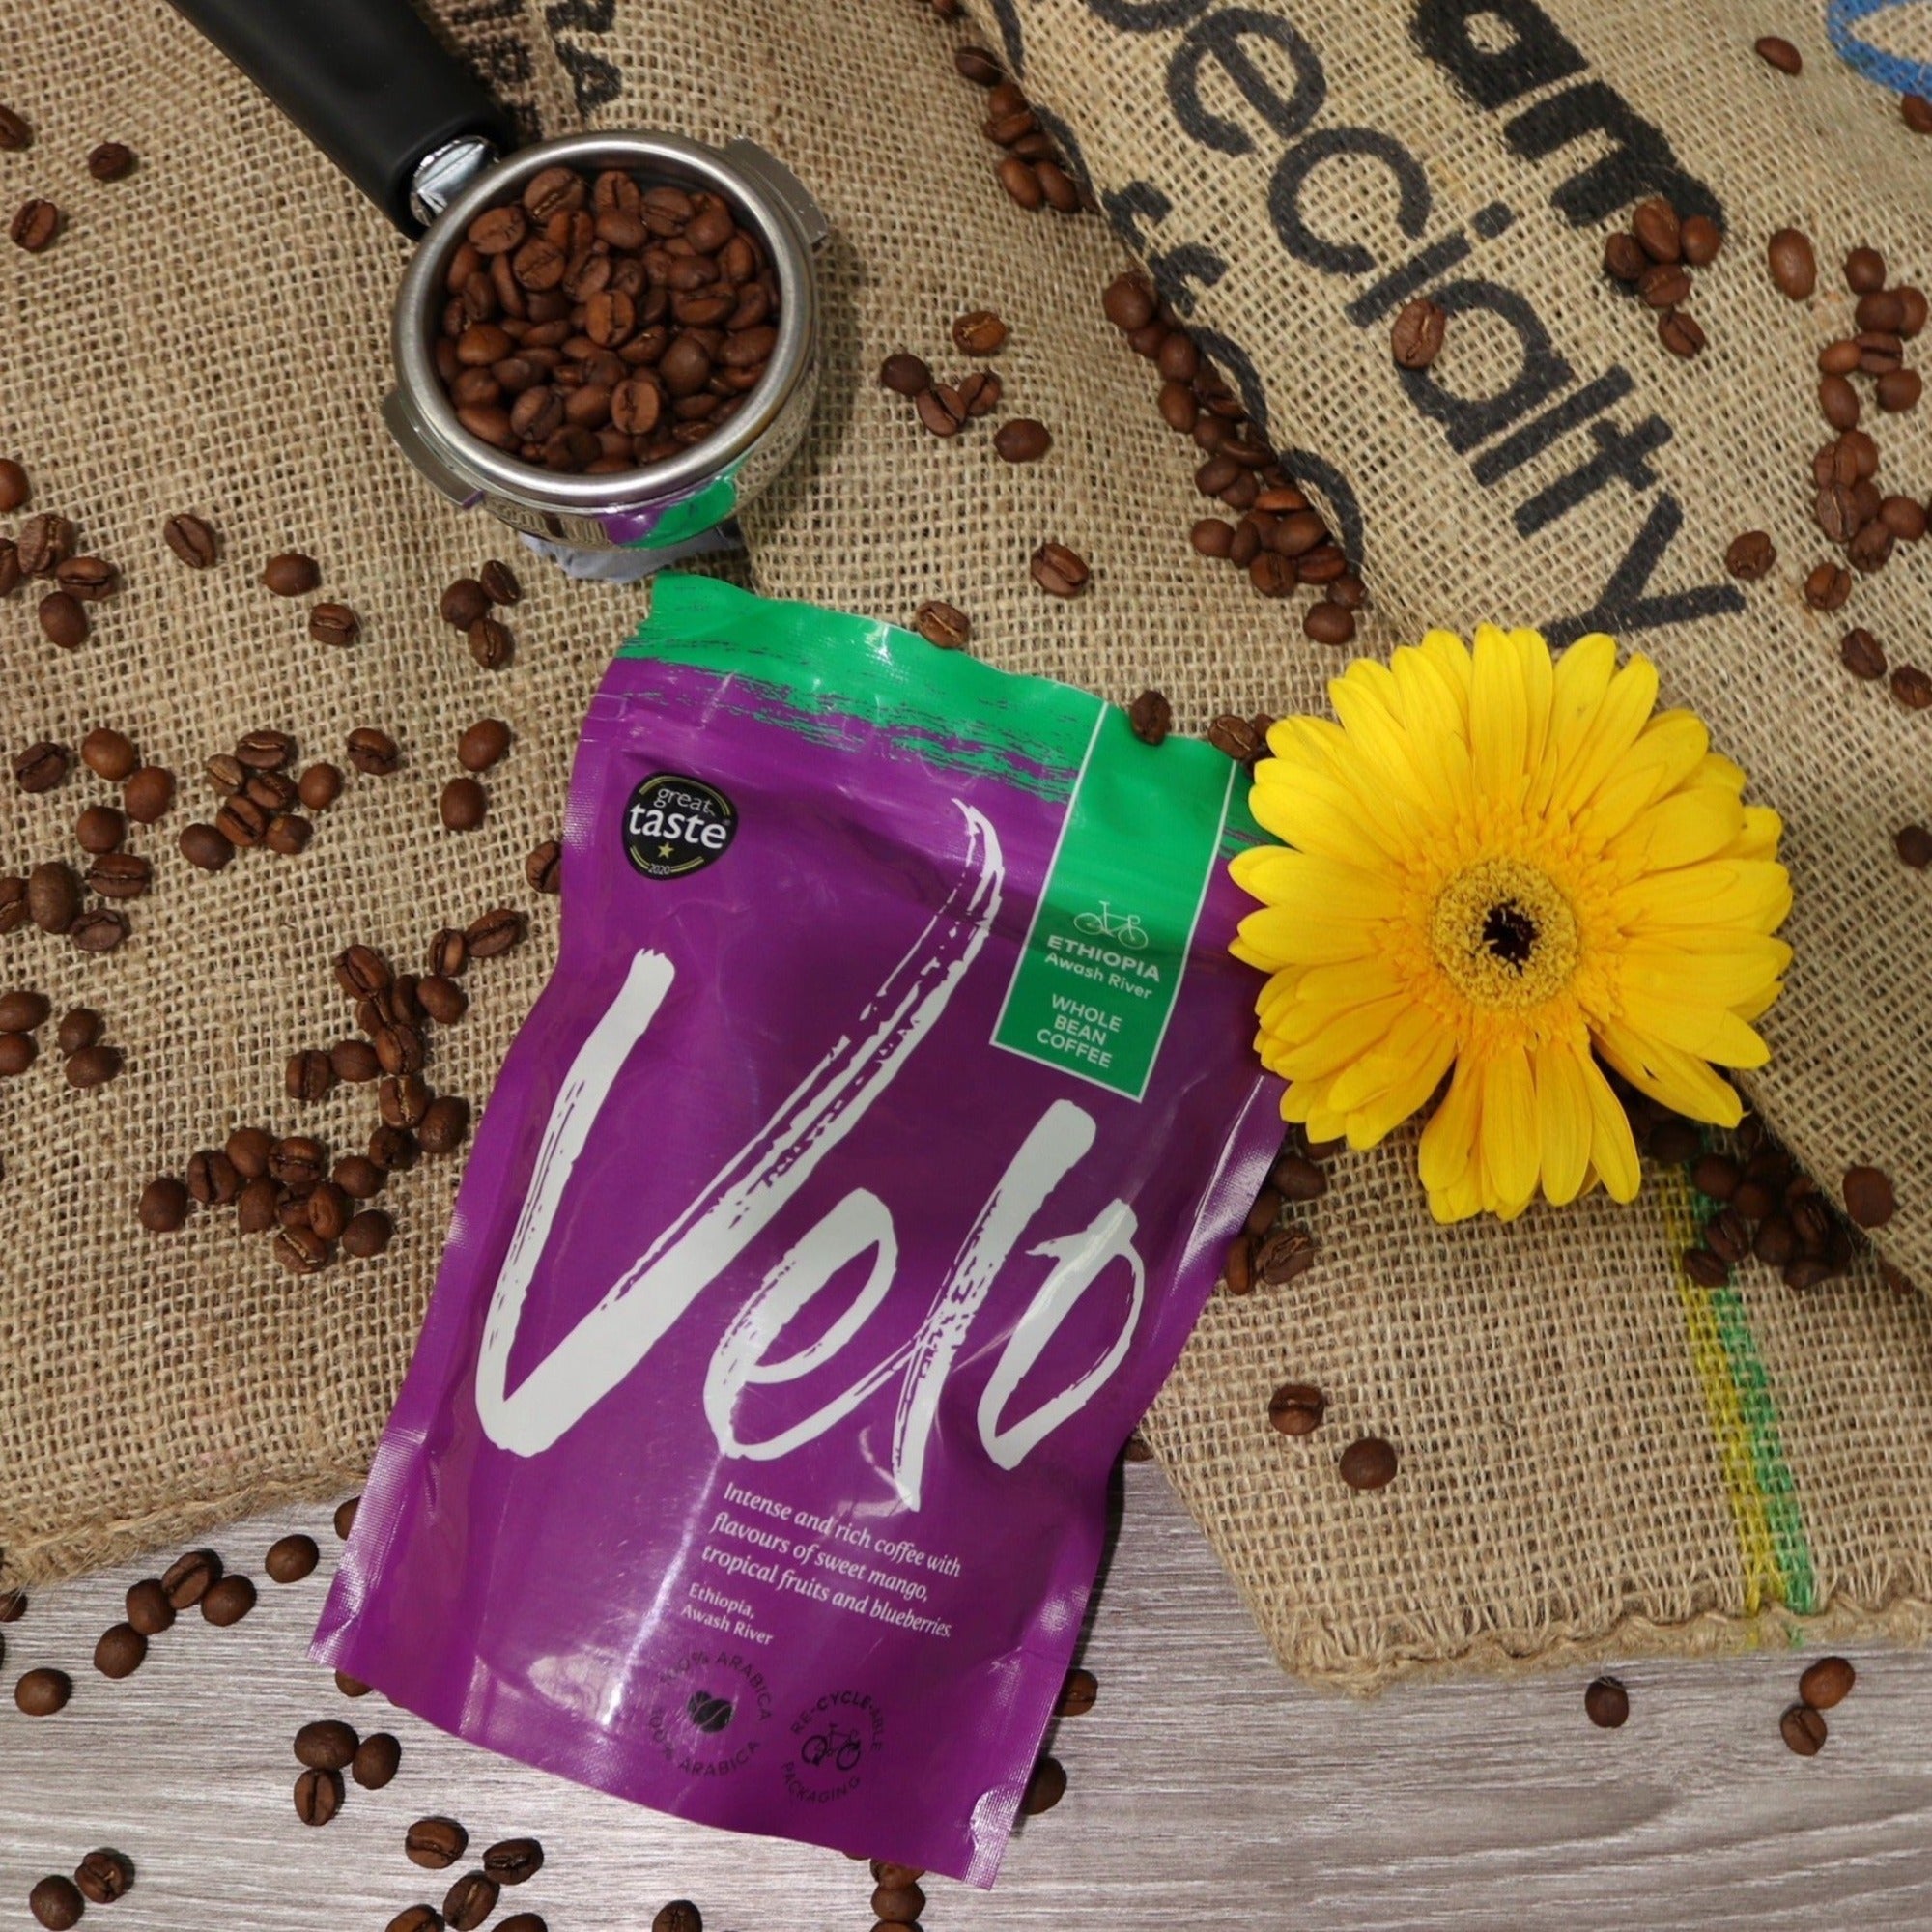 Velo Coffee Roasters - Awash River 200g Purple Coffee Bag with Green Strip across the top Ethiopia